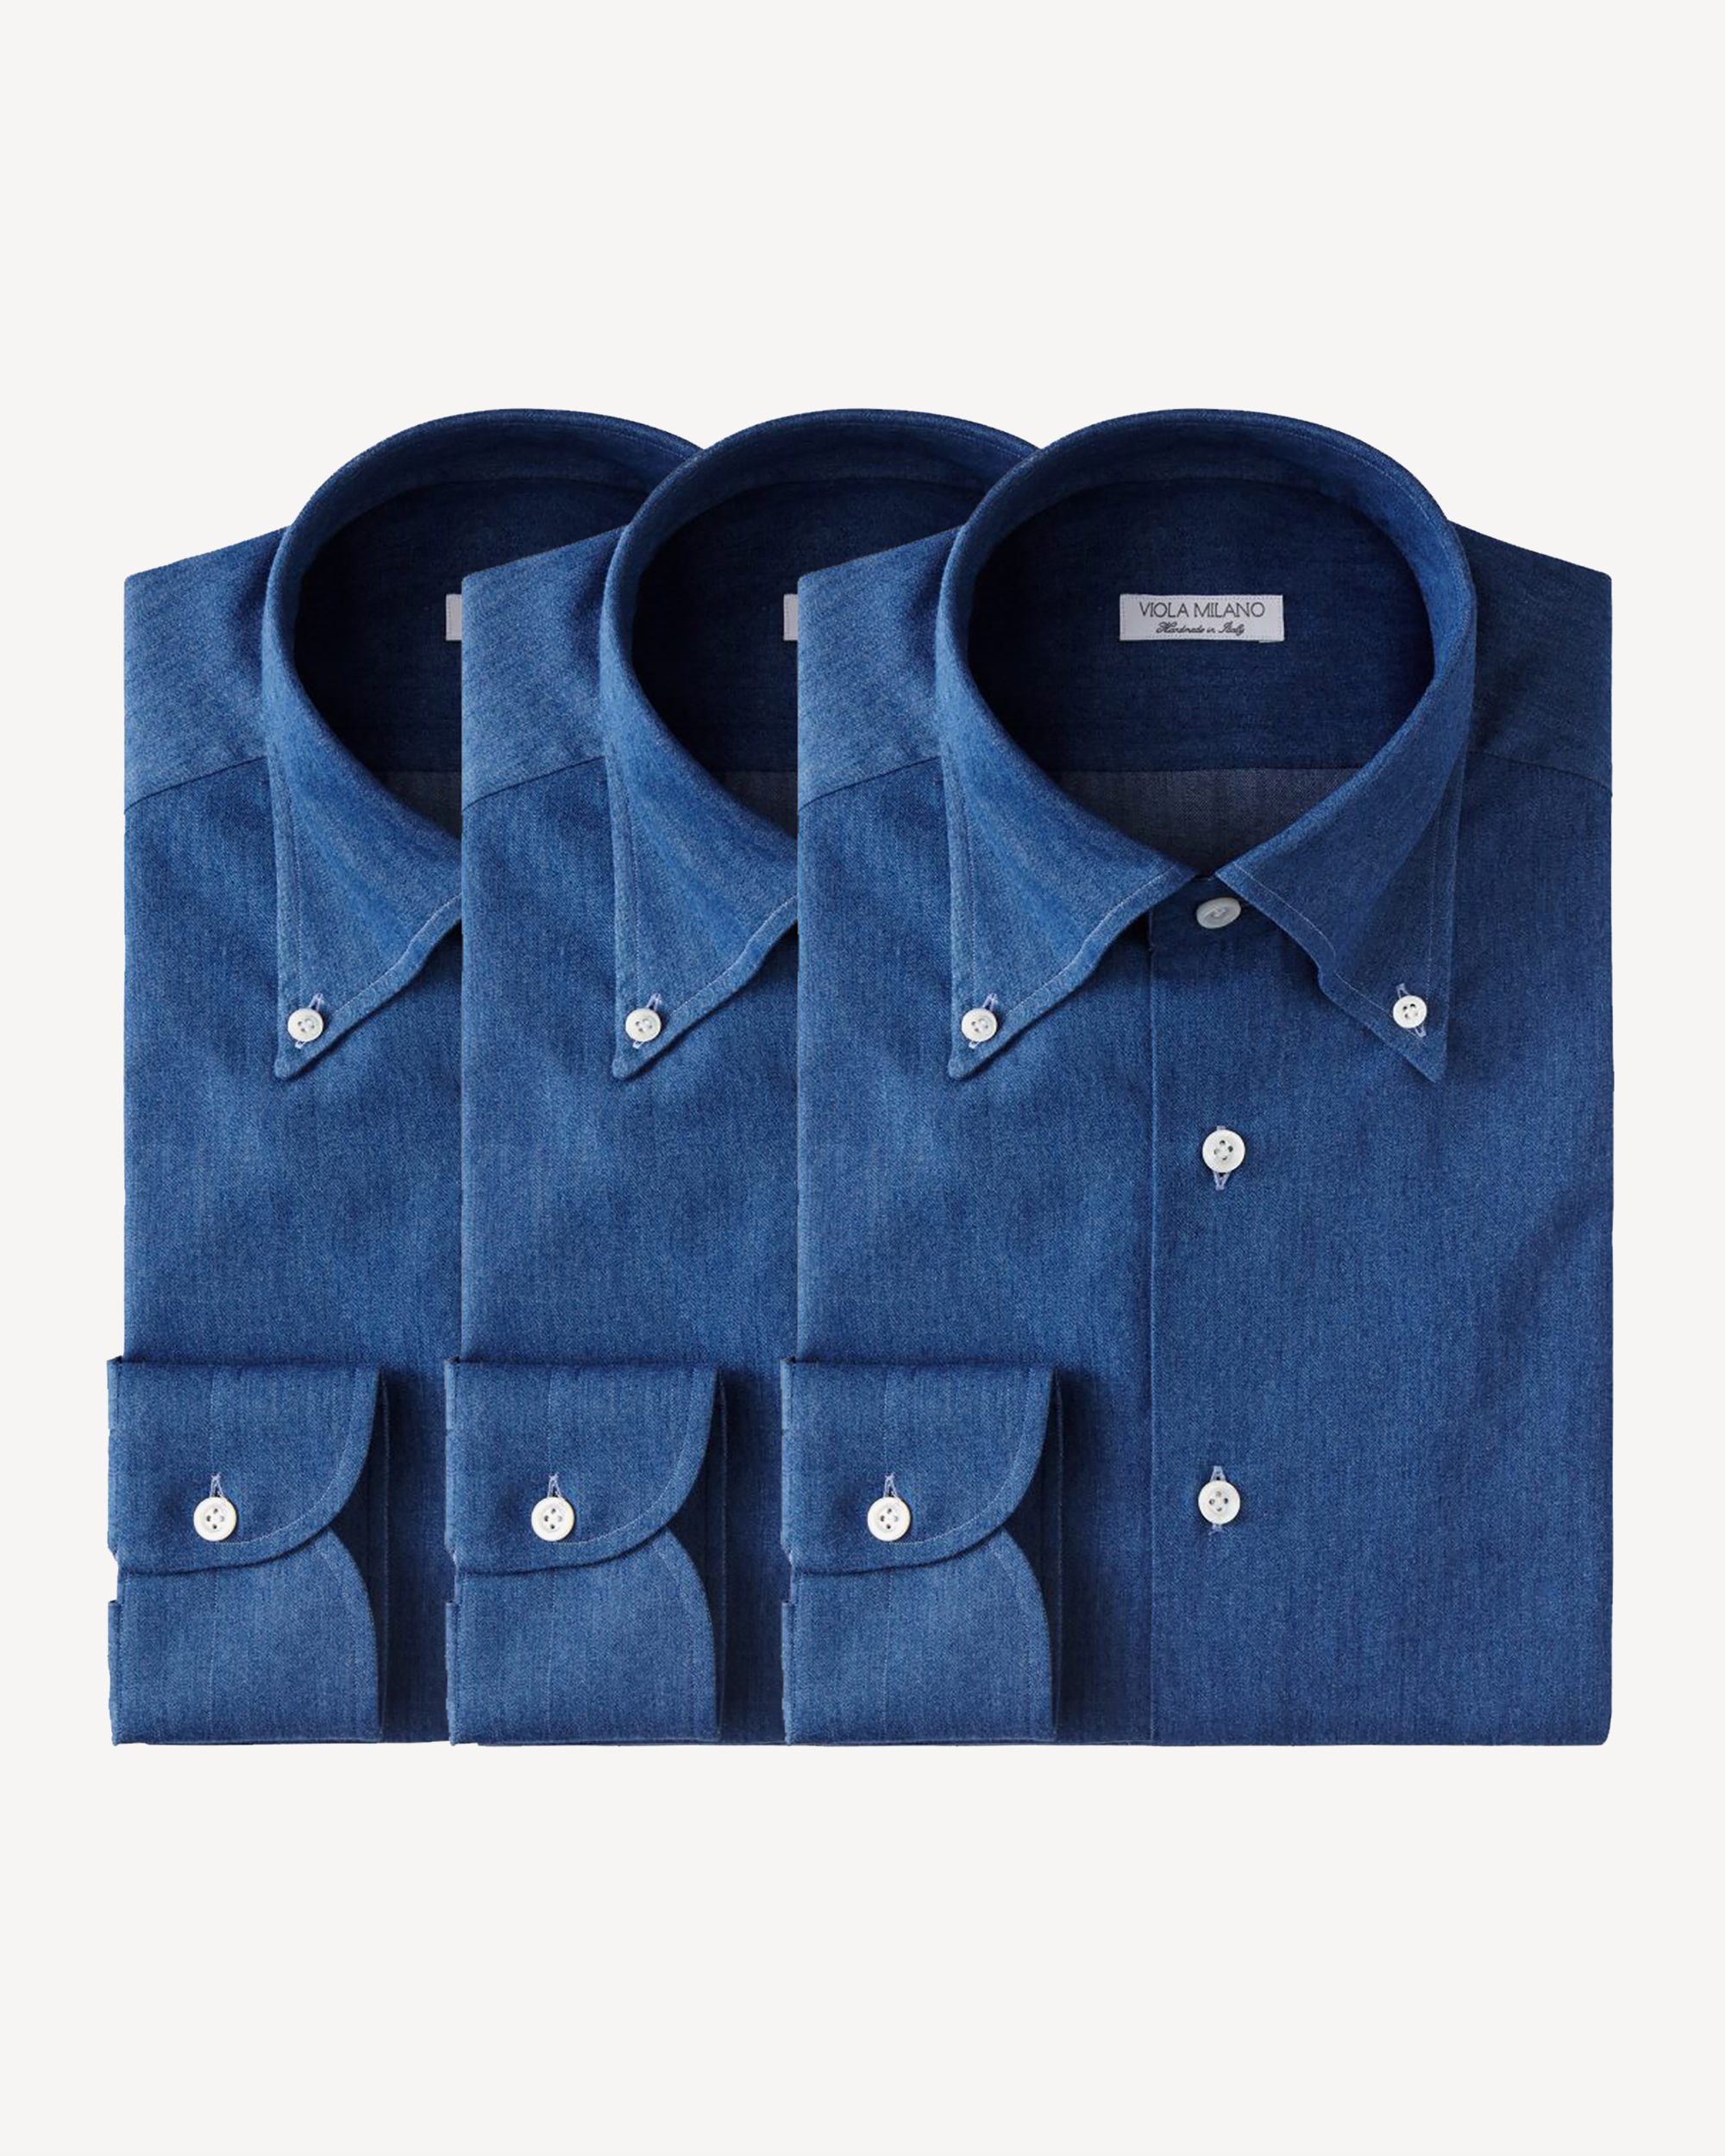 3 Classic Solid Package Button-Down Collar Shirt - Denim | Viola Milano